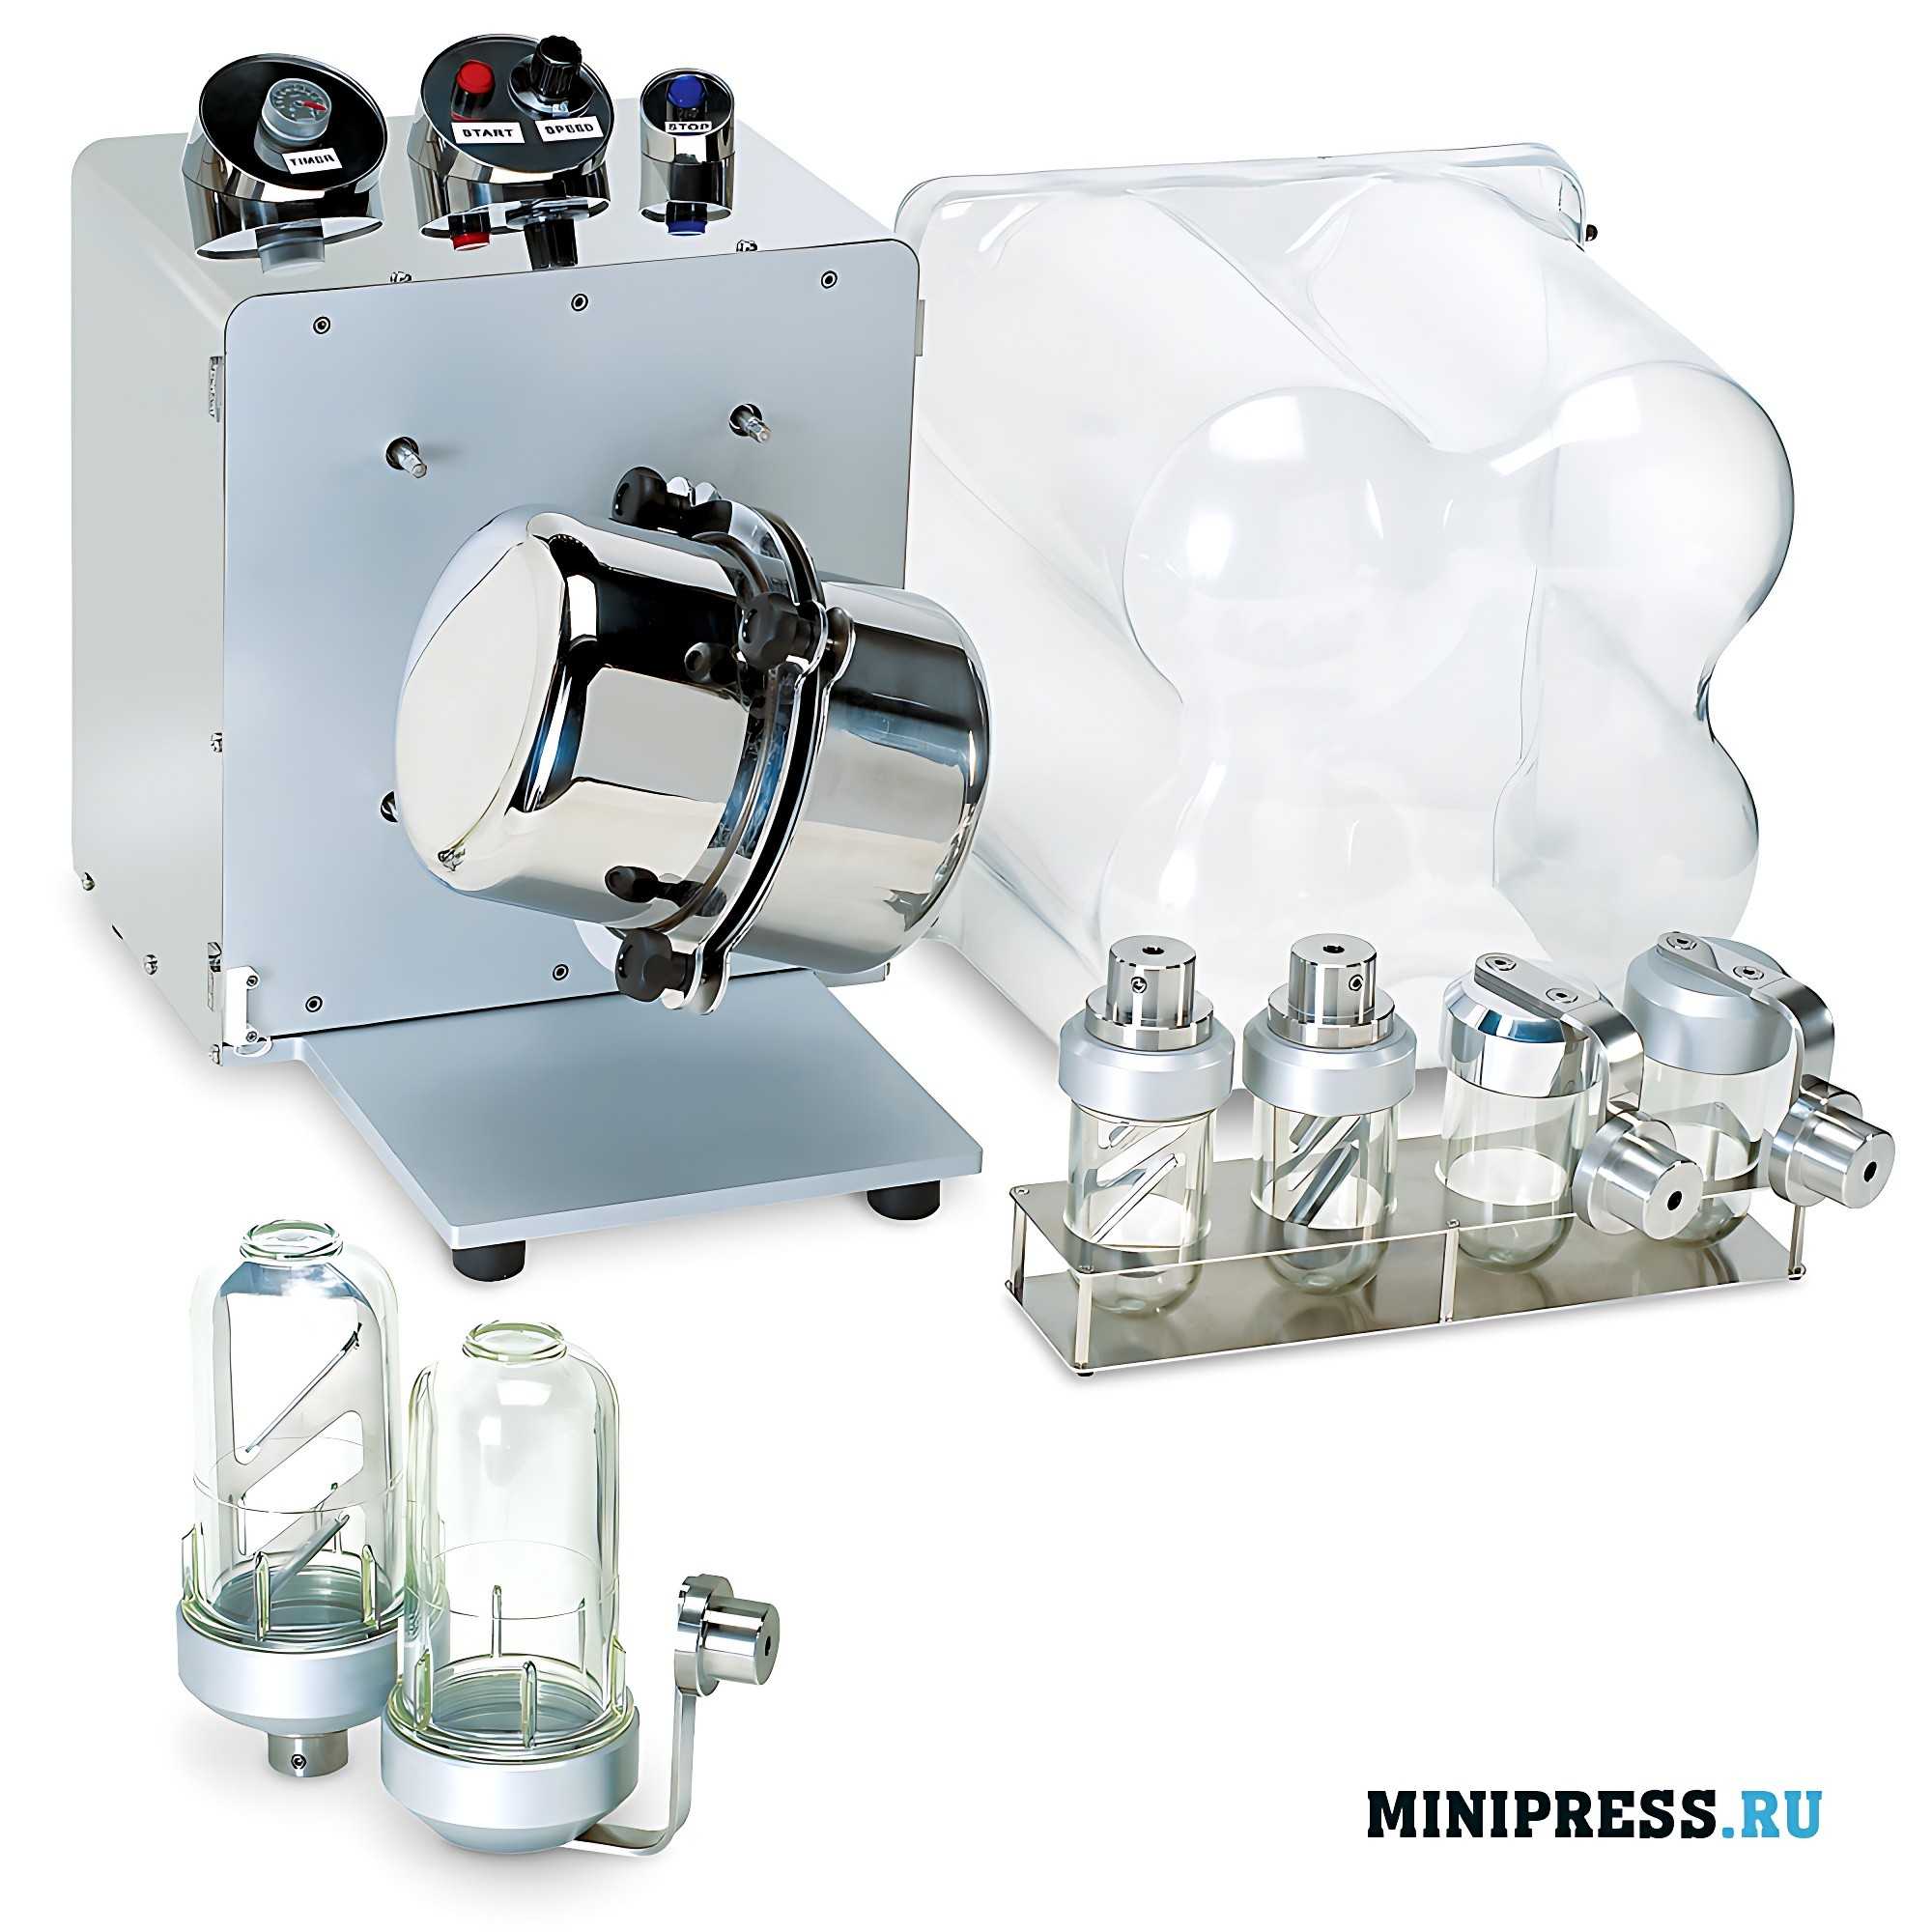 Multifunctional laboratory powder mixer ITA-07